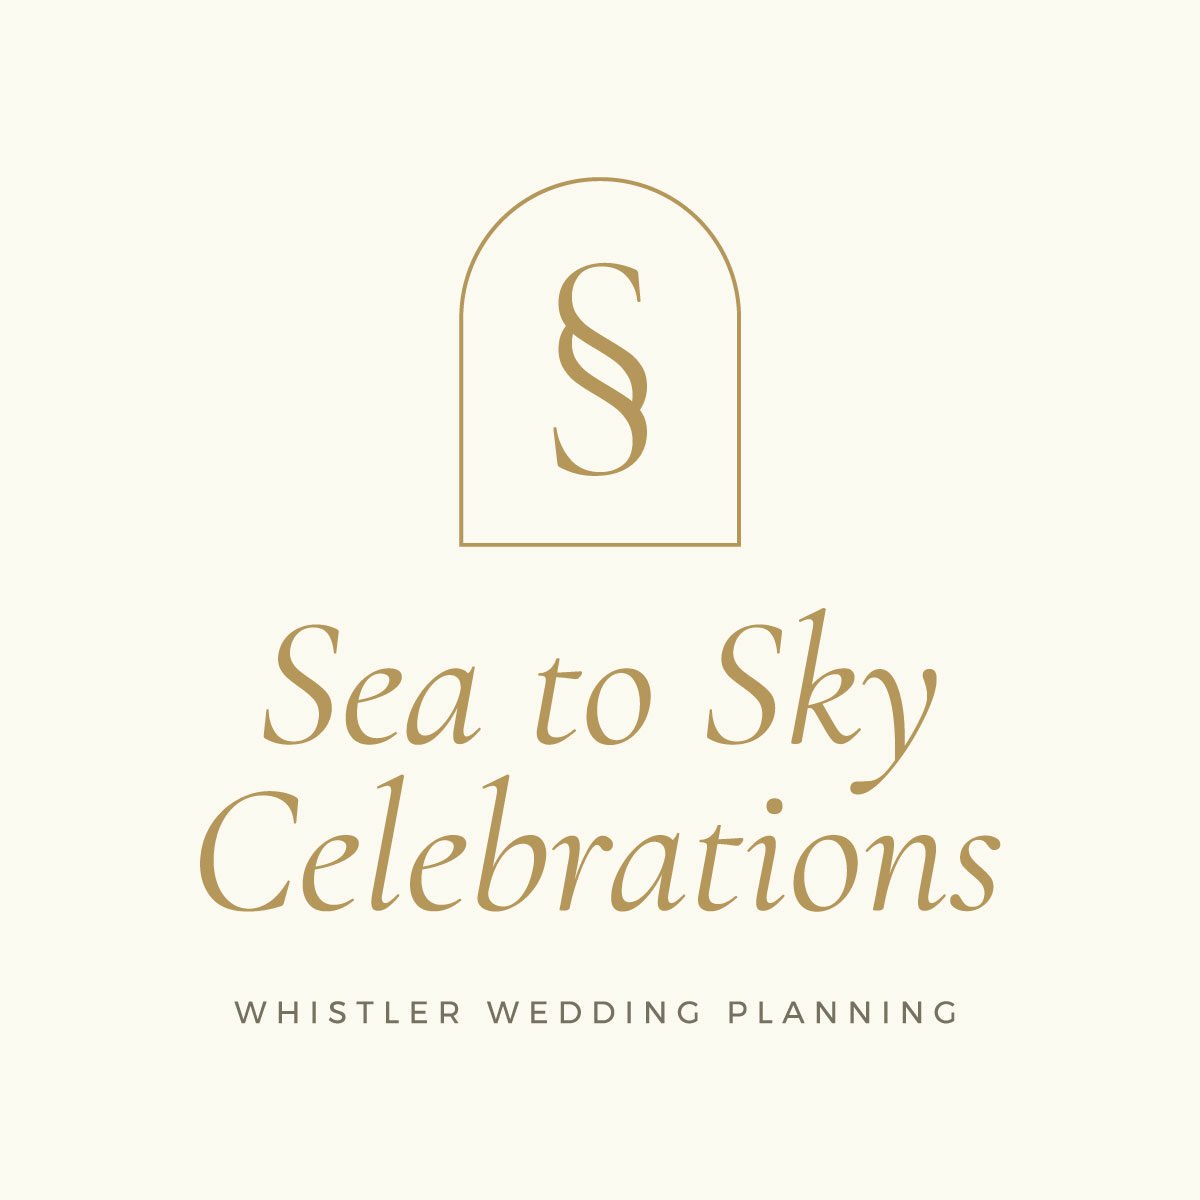 lindsay-mcghee-designs-sea-to-sky-celebrations-logo-stacked